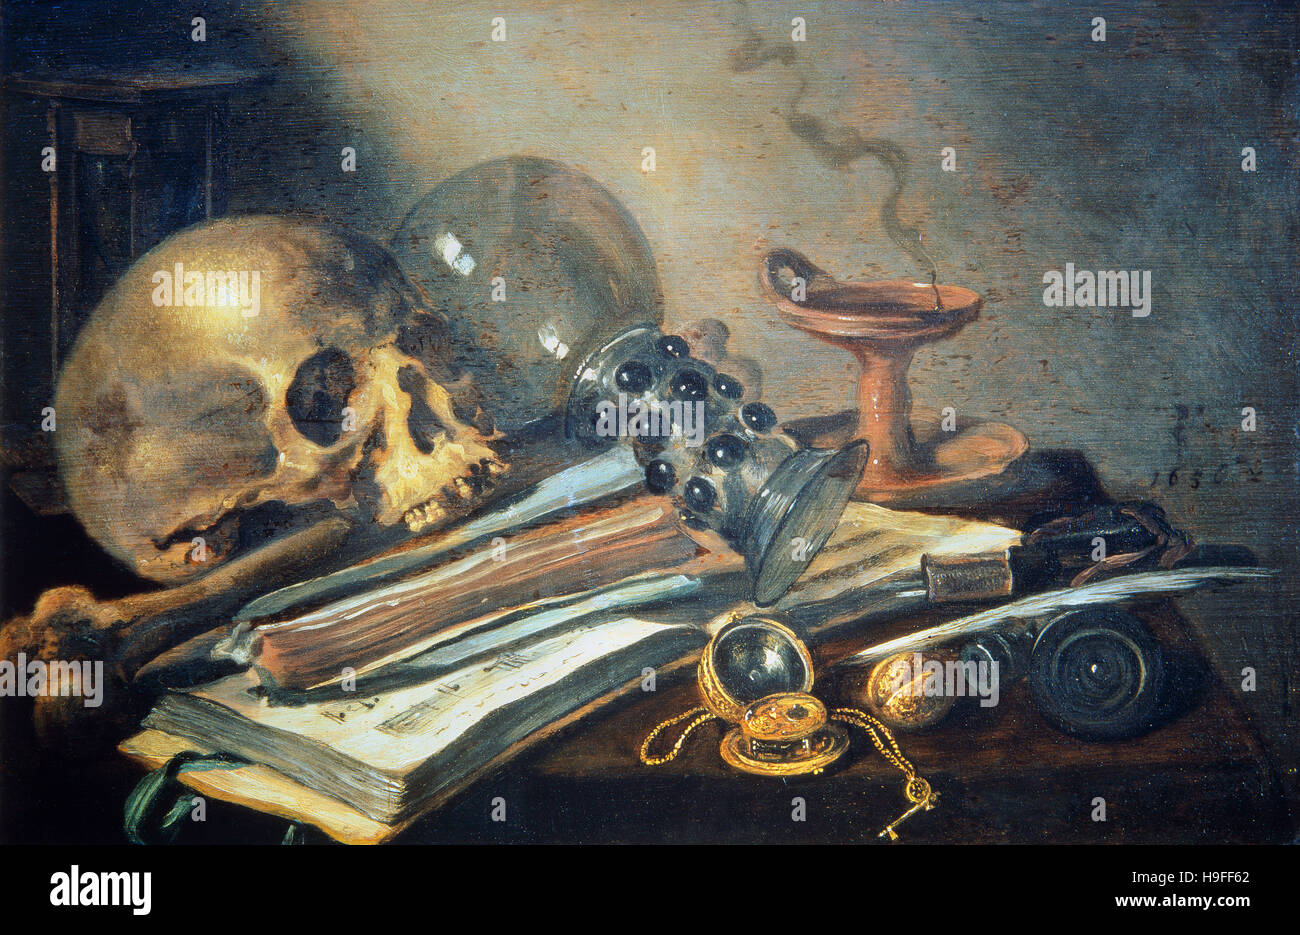 Pieter Claesz - Vanitas still life with a skull and a vase Stock Photo